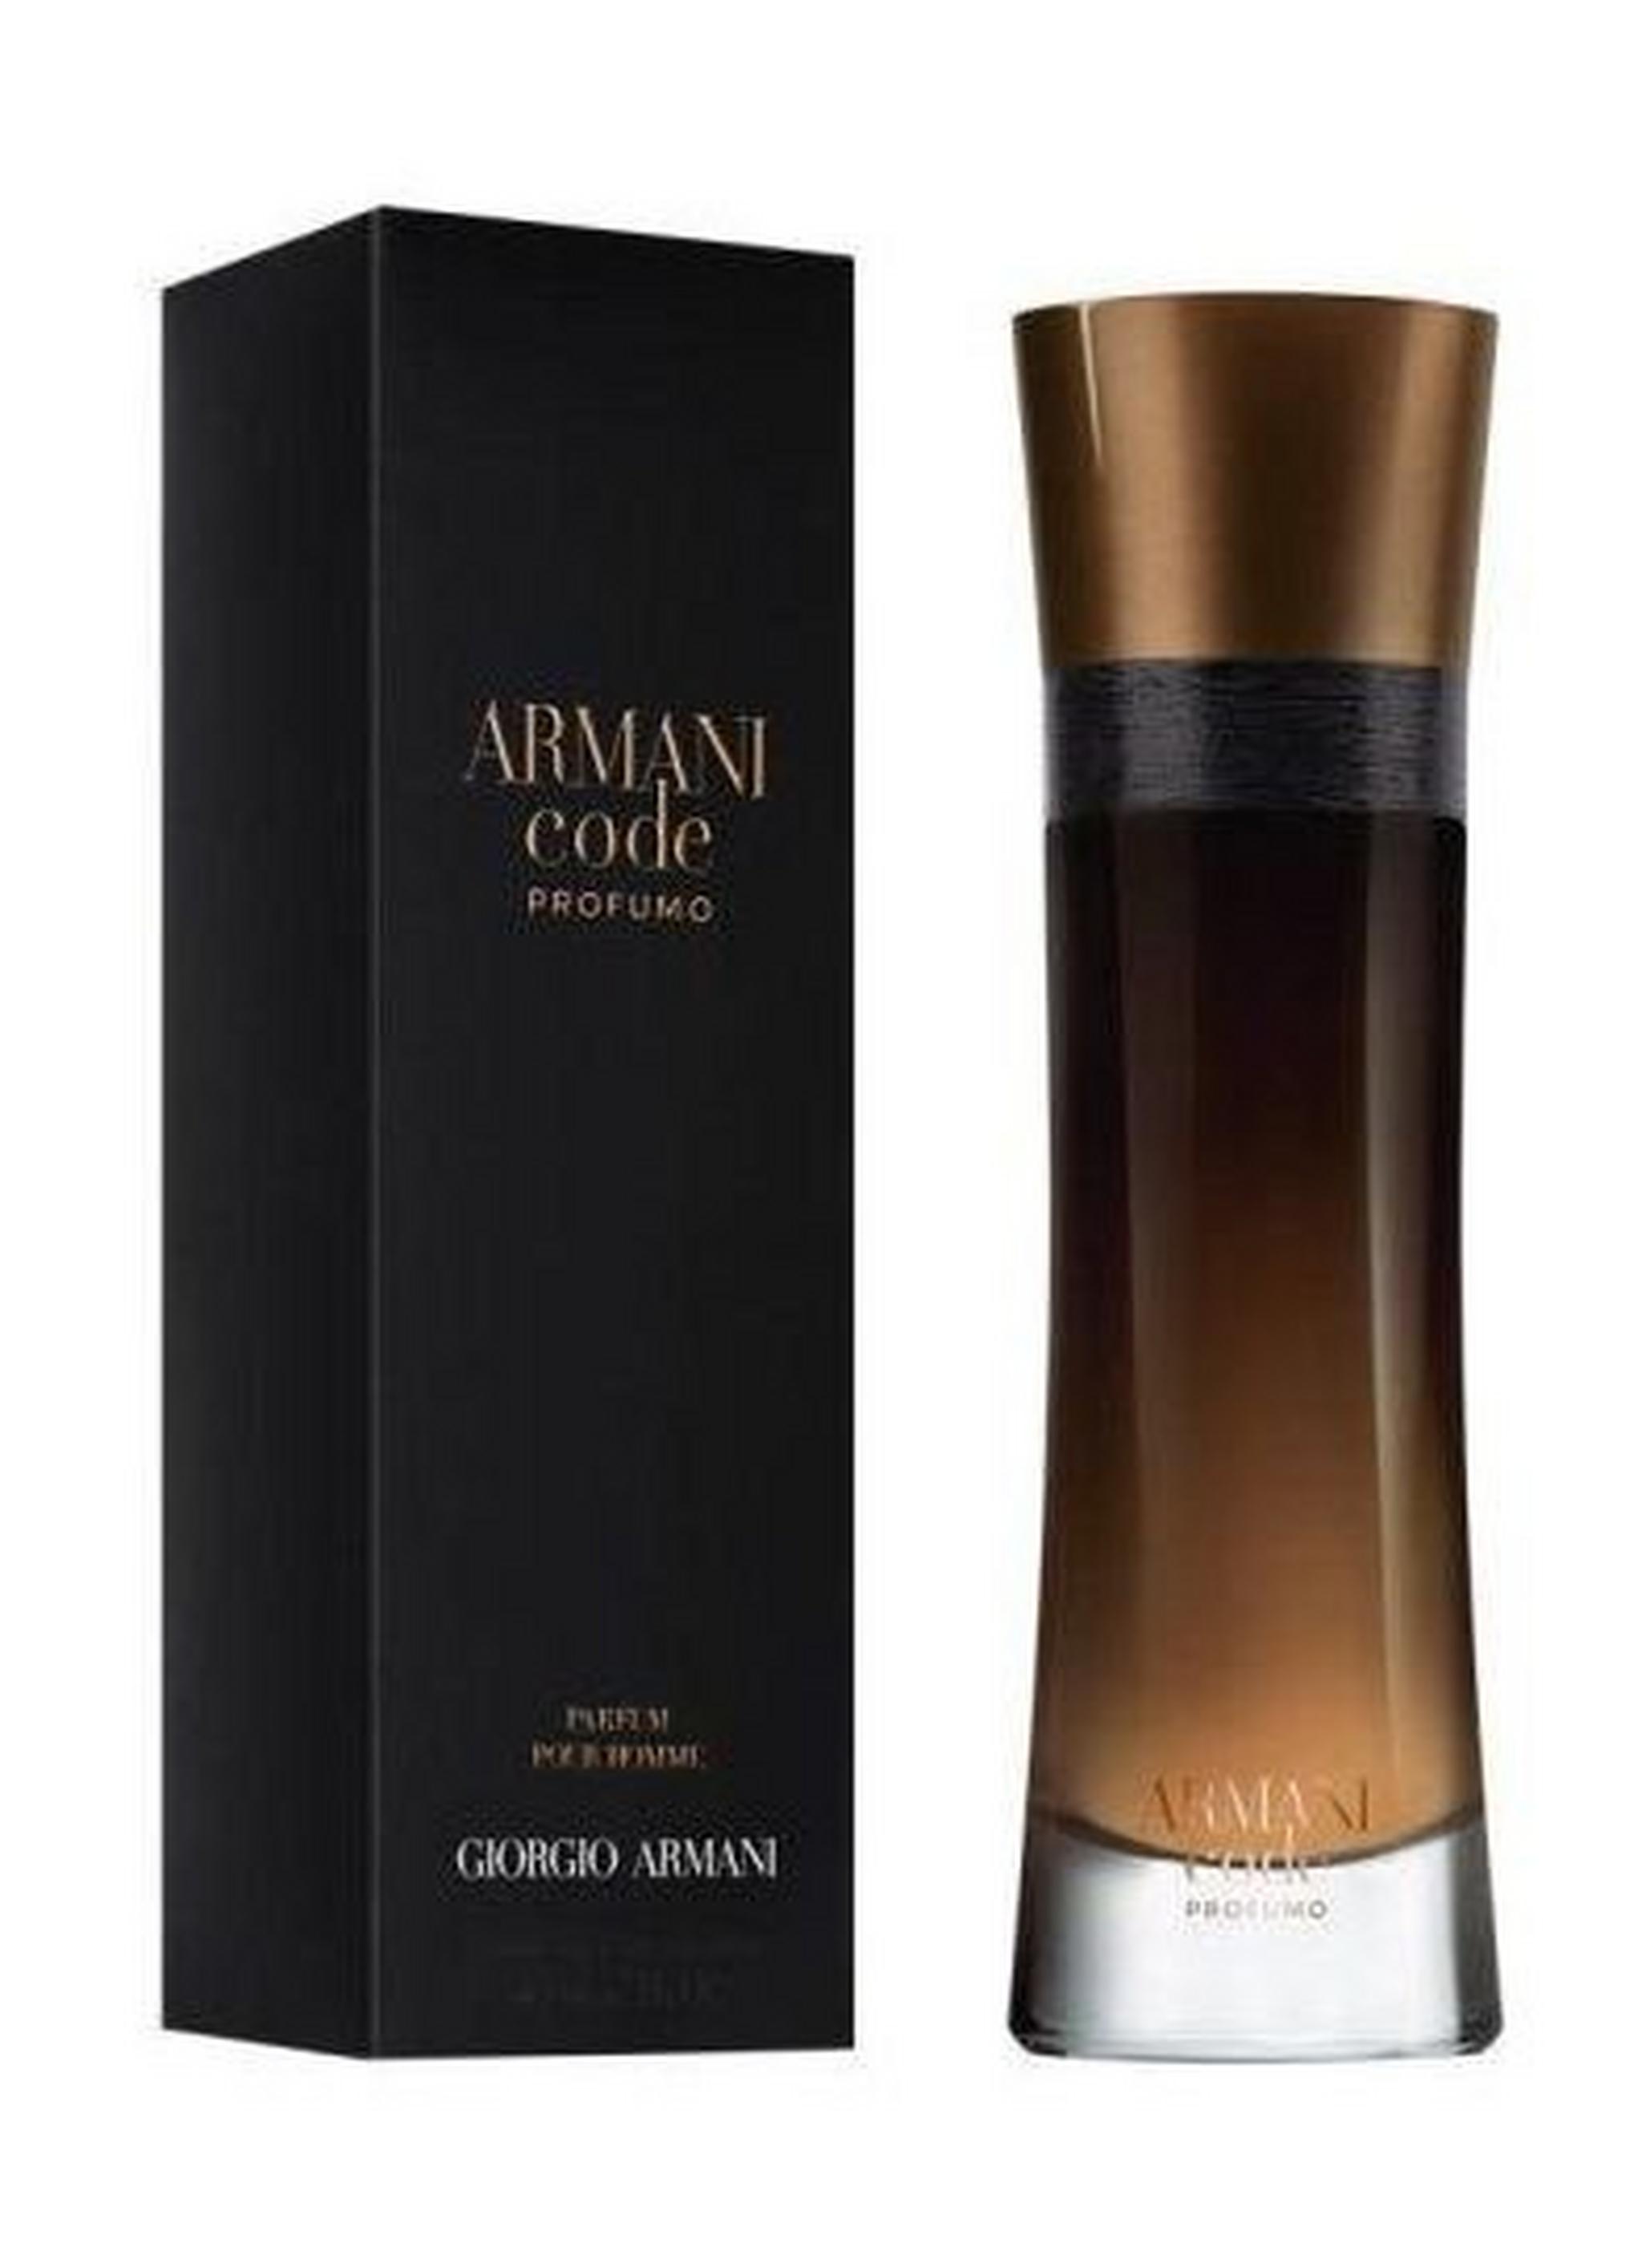 Armani Code Profumo Giorgio Armani Eau De Parfum for Men 110ml